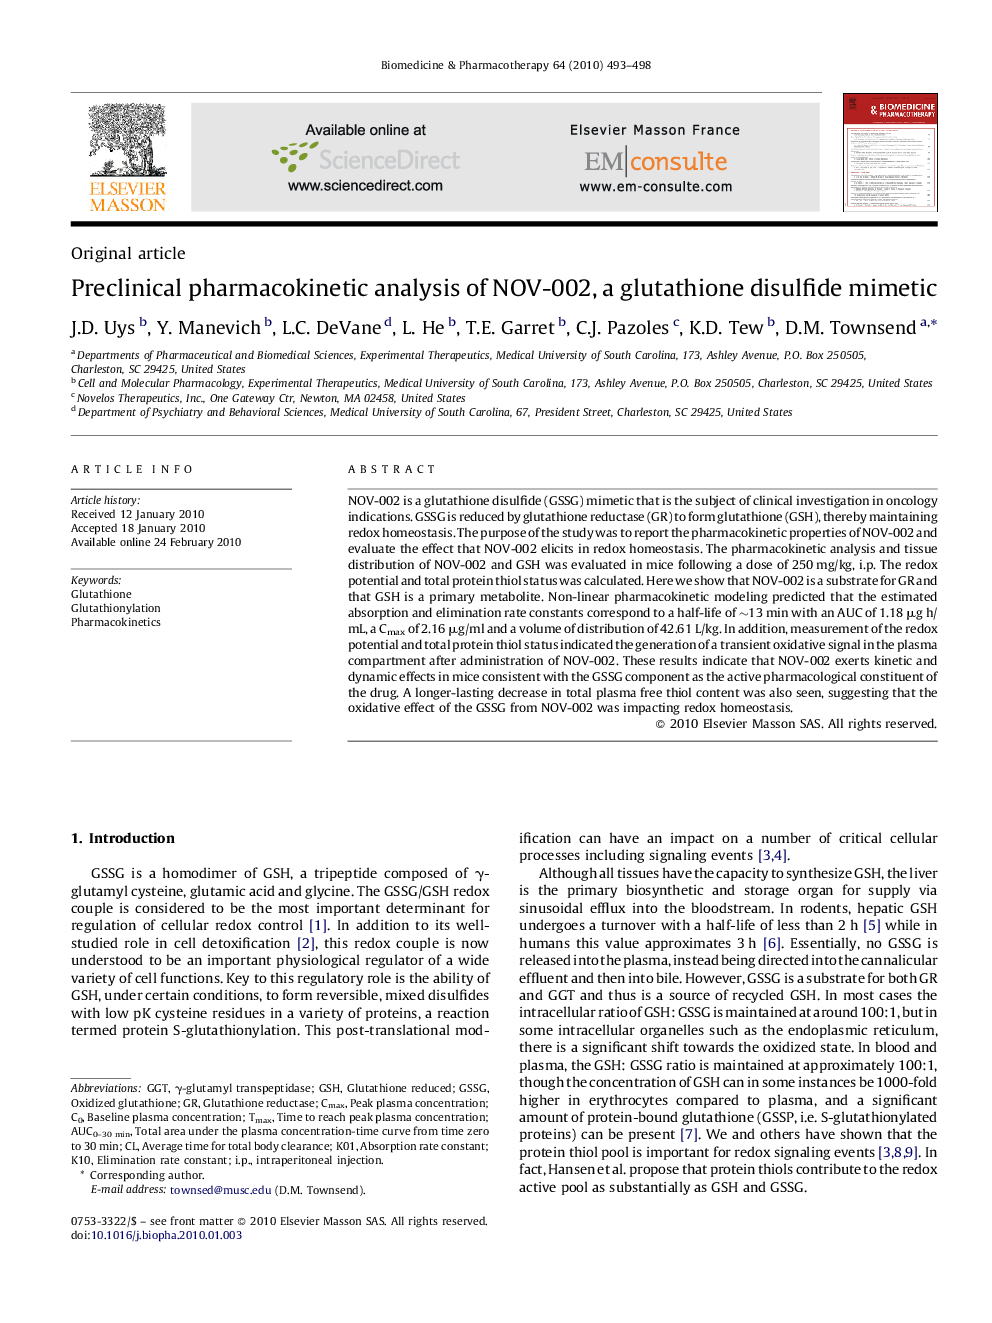 Preclinical pharmacokinetic analysis of NOV-002, a glutathione disulfide mimetic